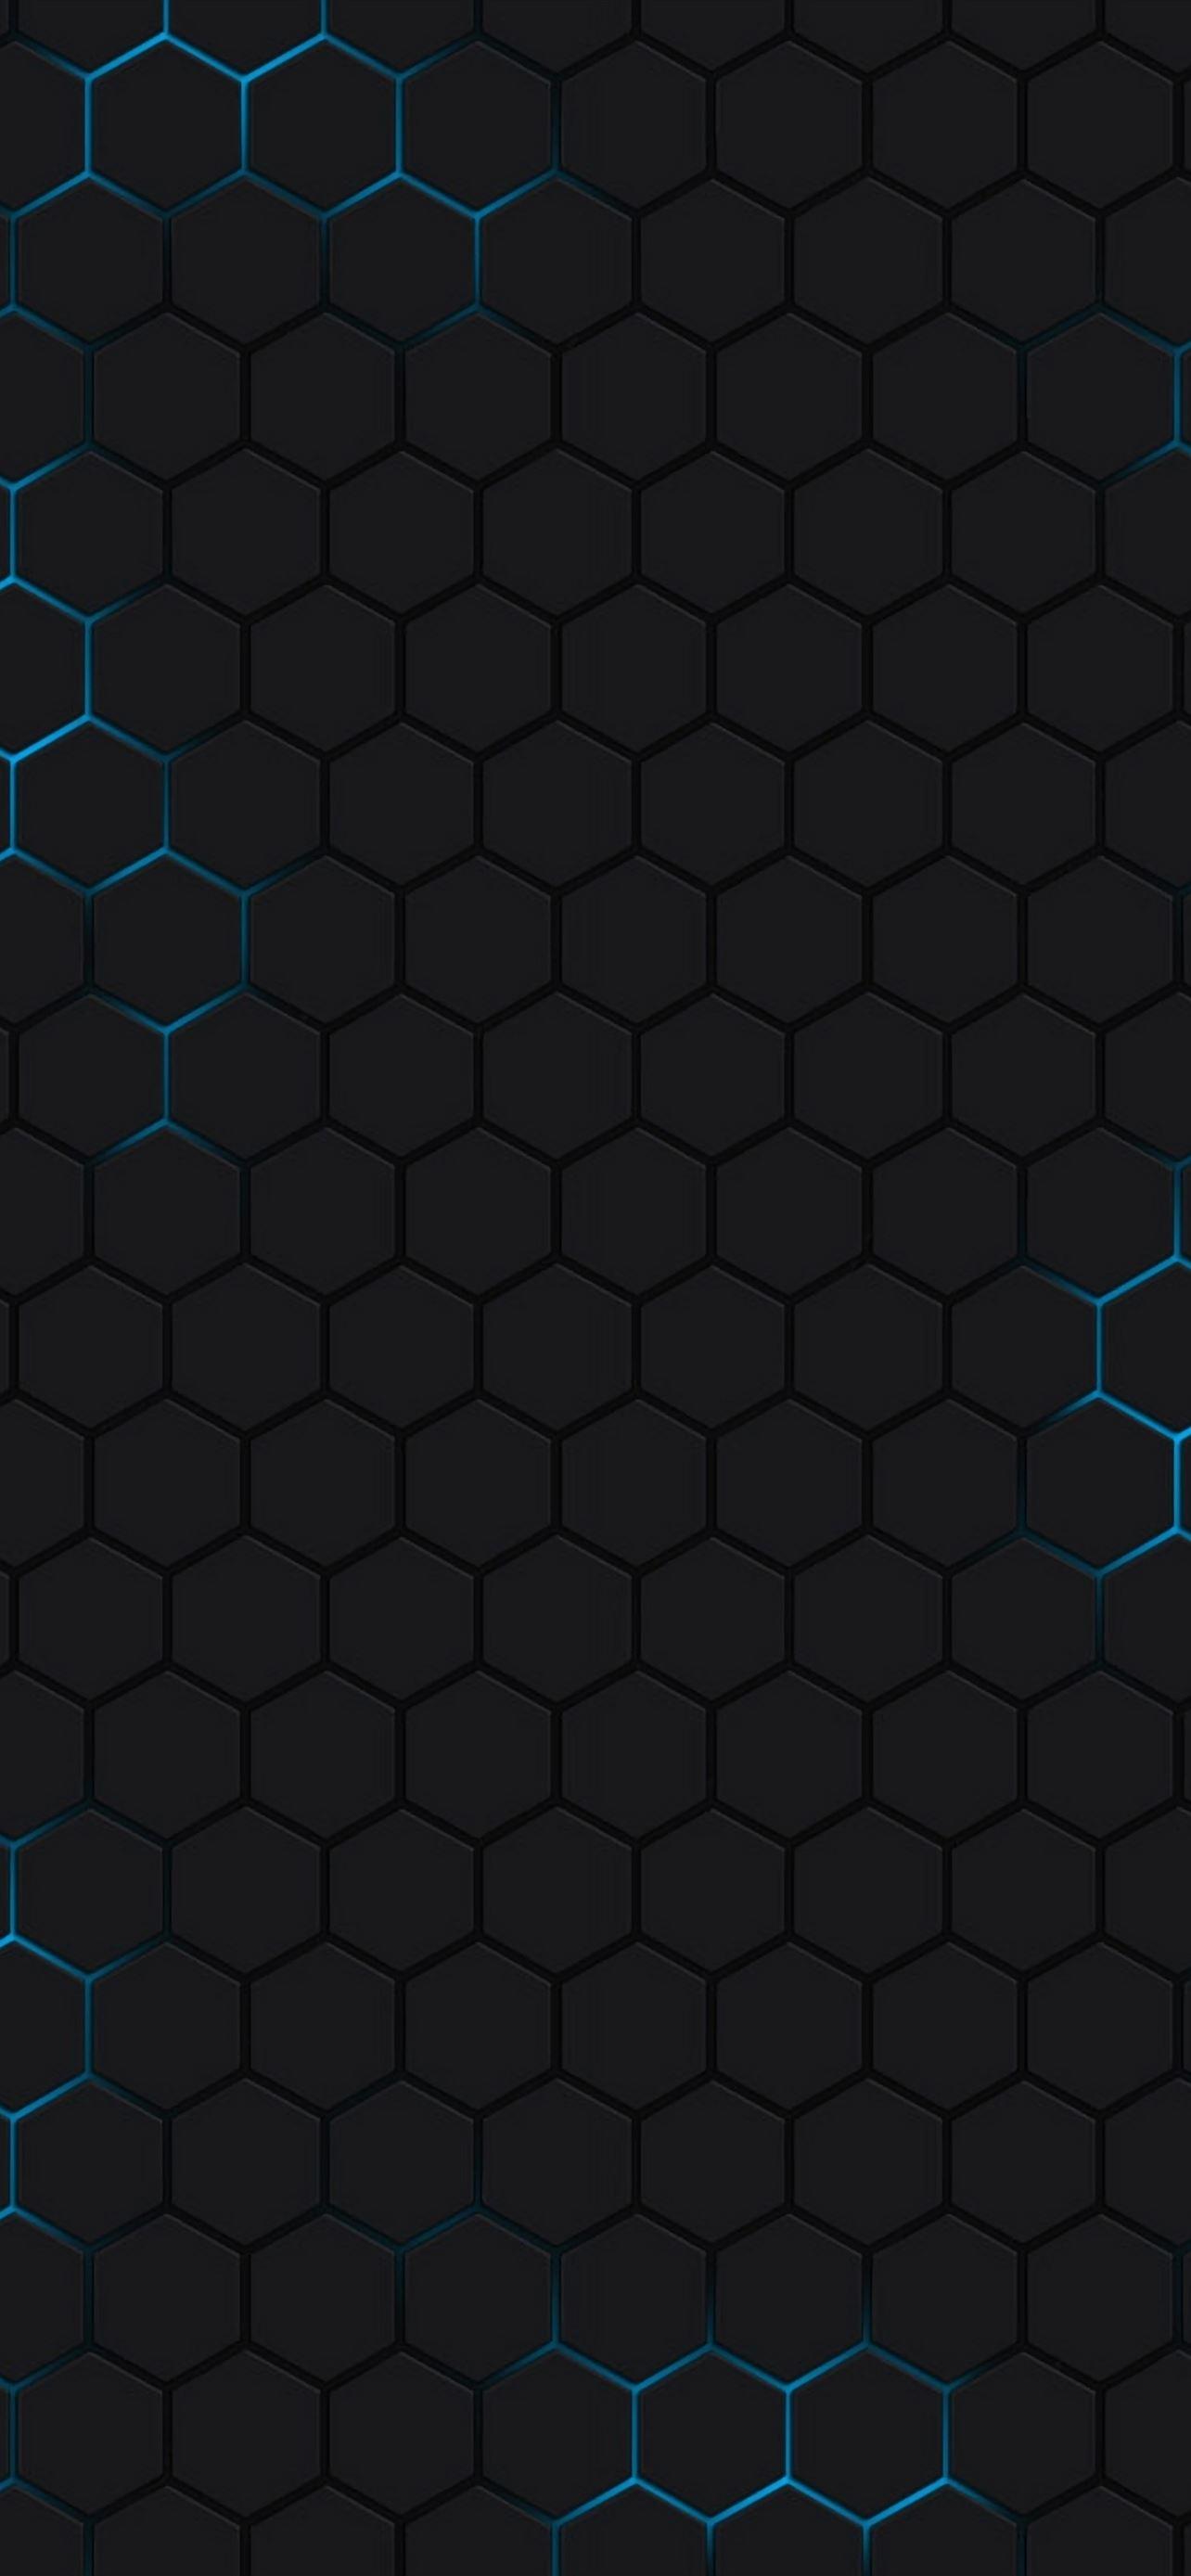 Hexagons Abstract iPhone Wallpaper